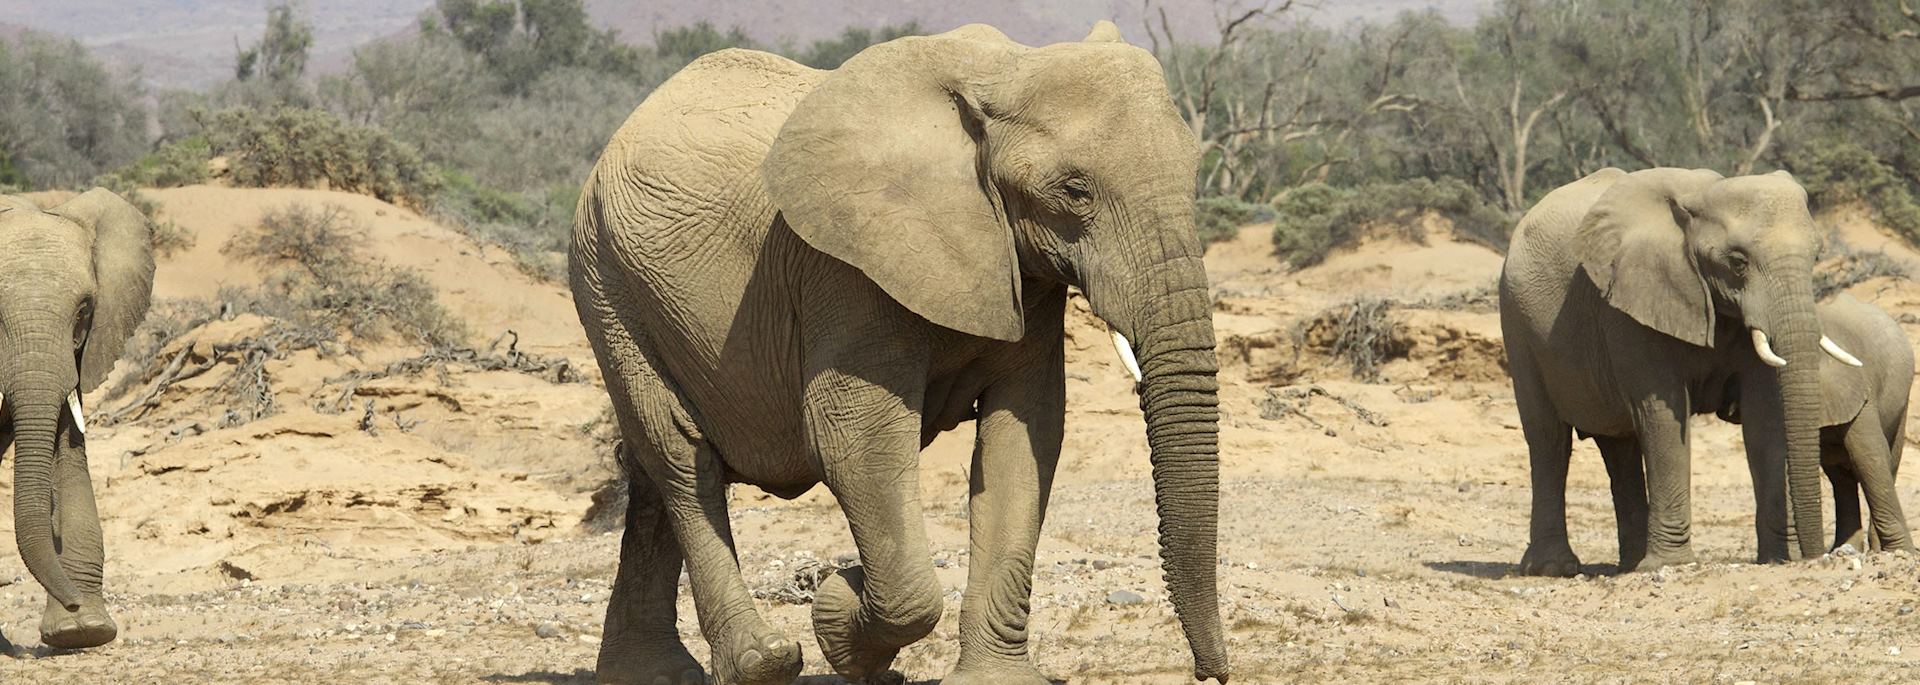 Elephants in Damaraland